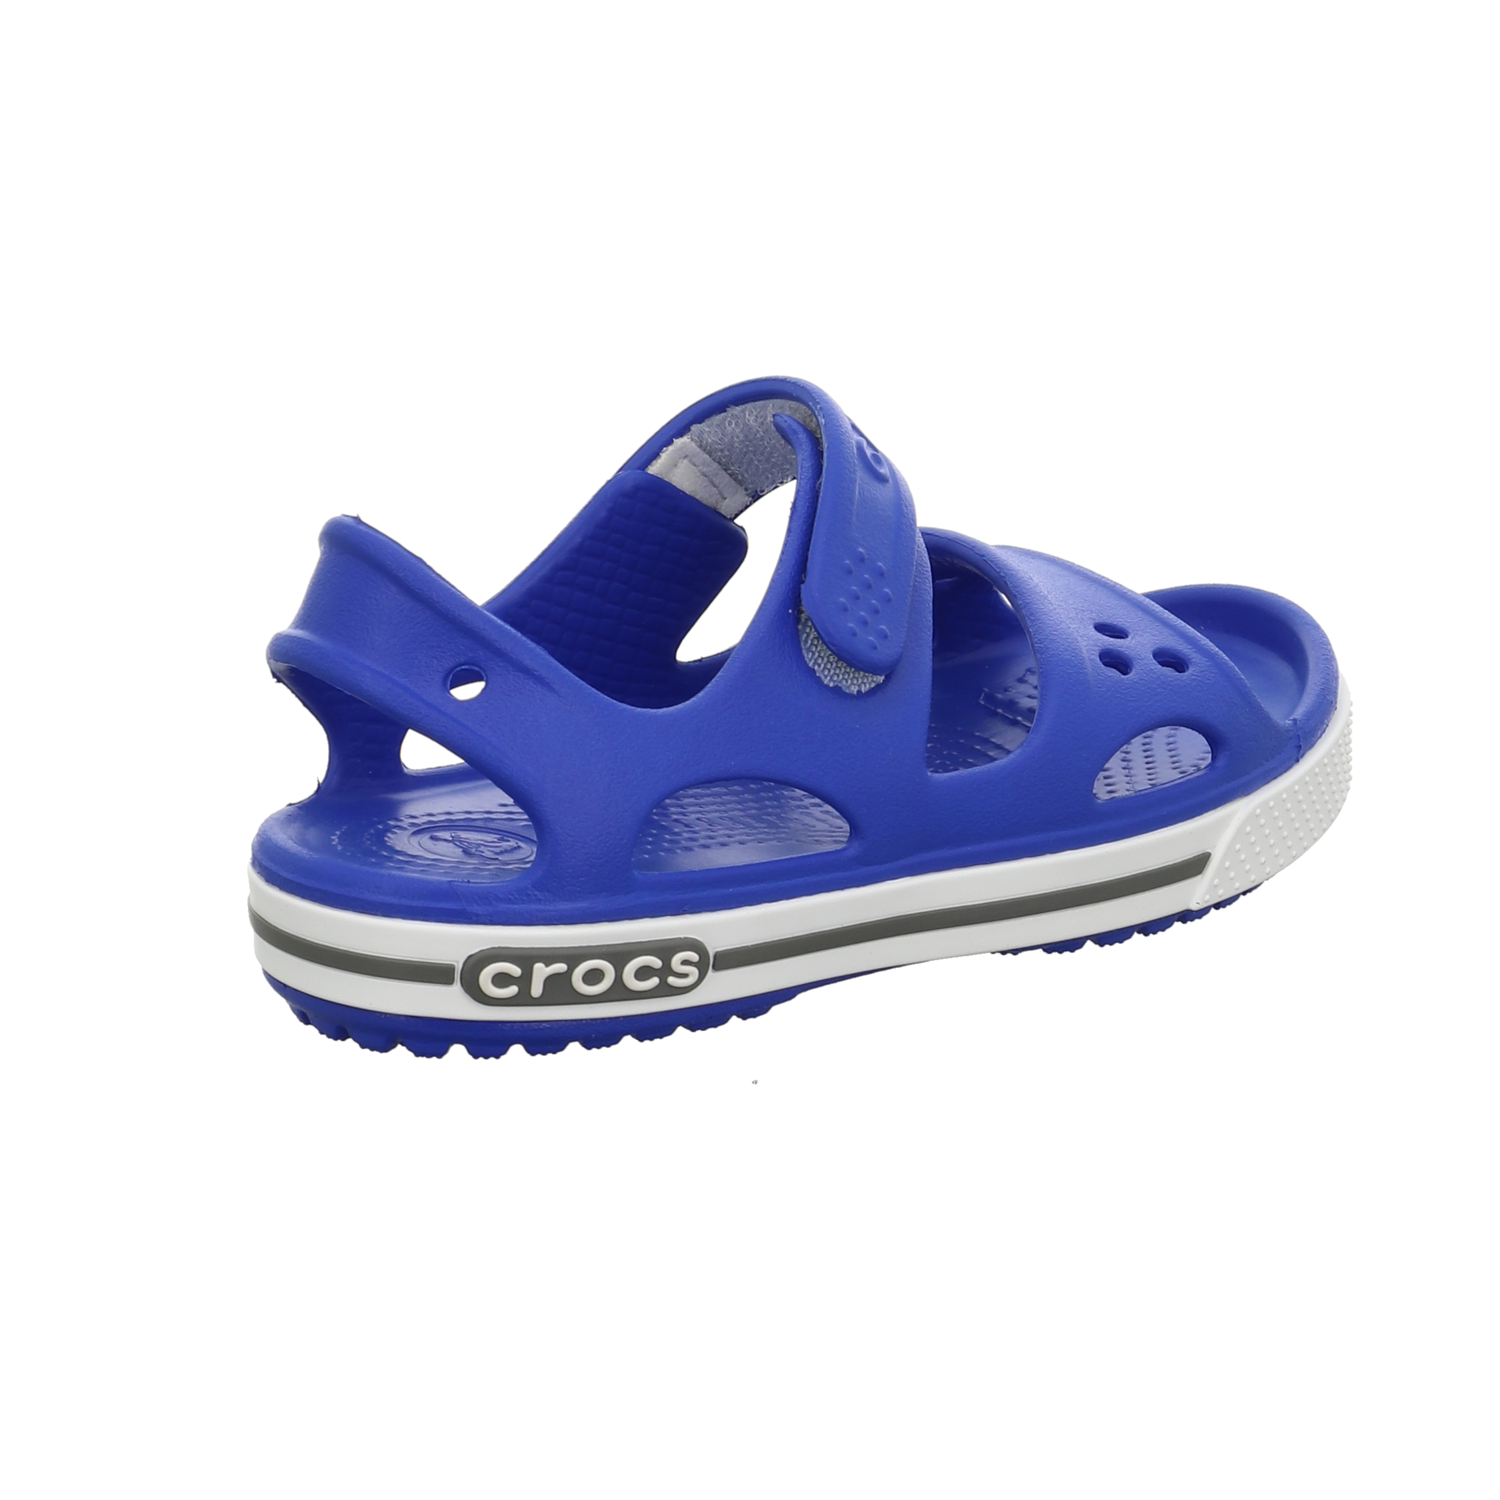 Crocs Casual-Sandalette denim / hell-blau